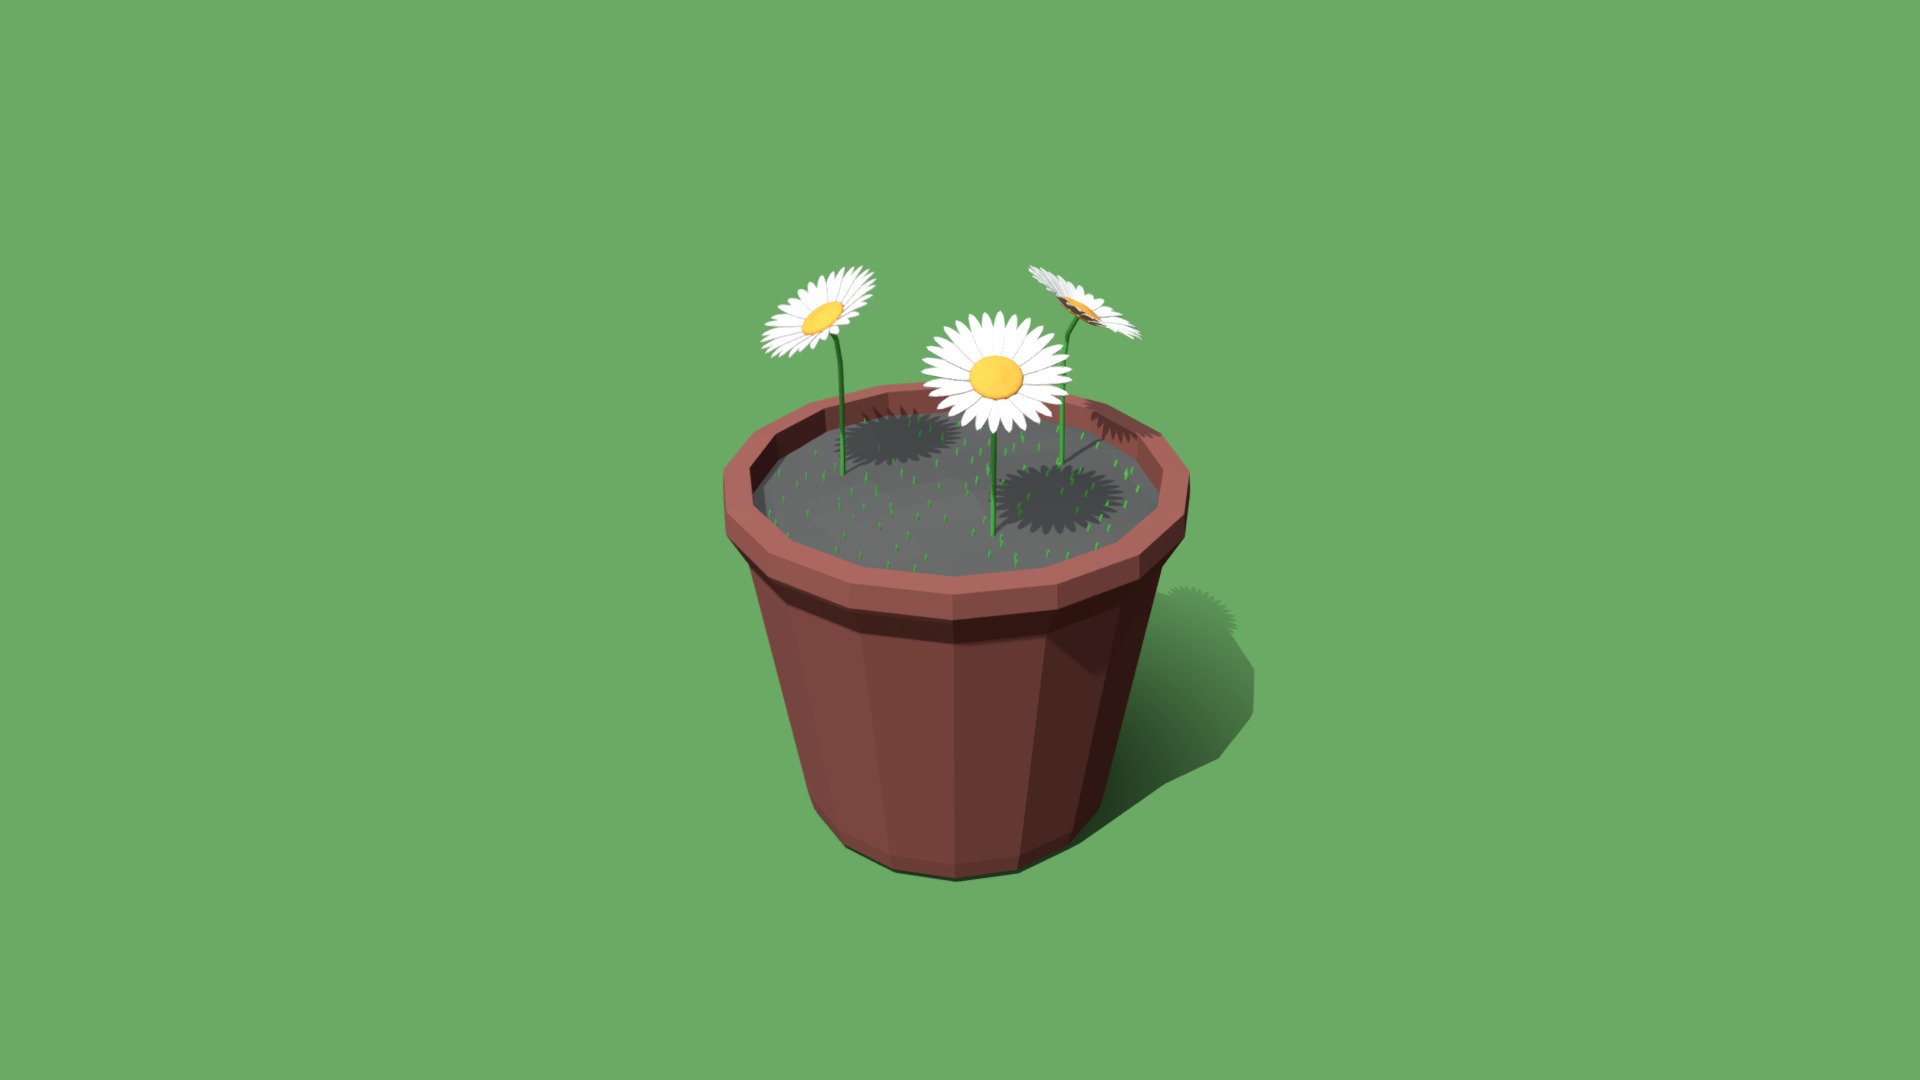 ArtStation - Low Poly Cartoon Daisy Flowers